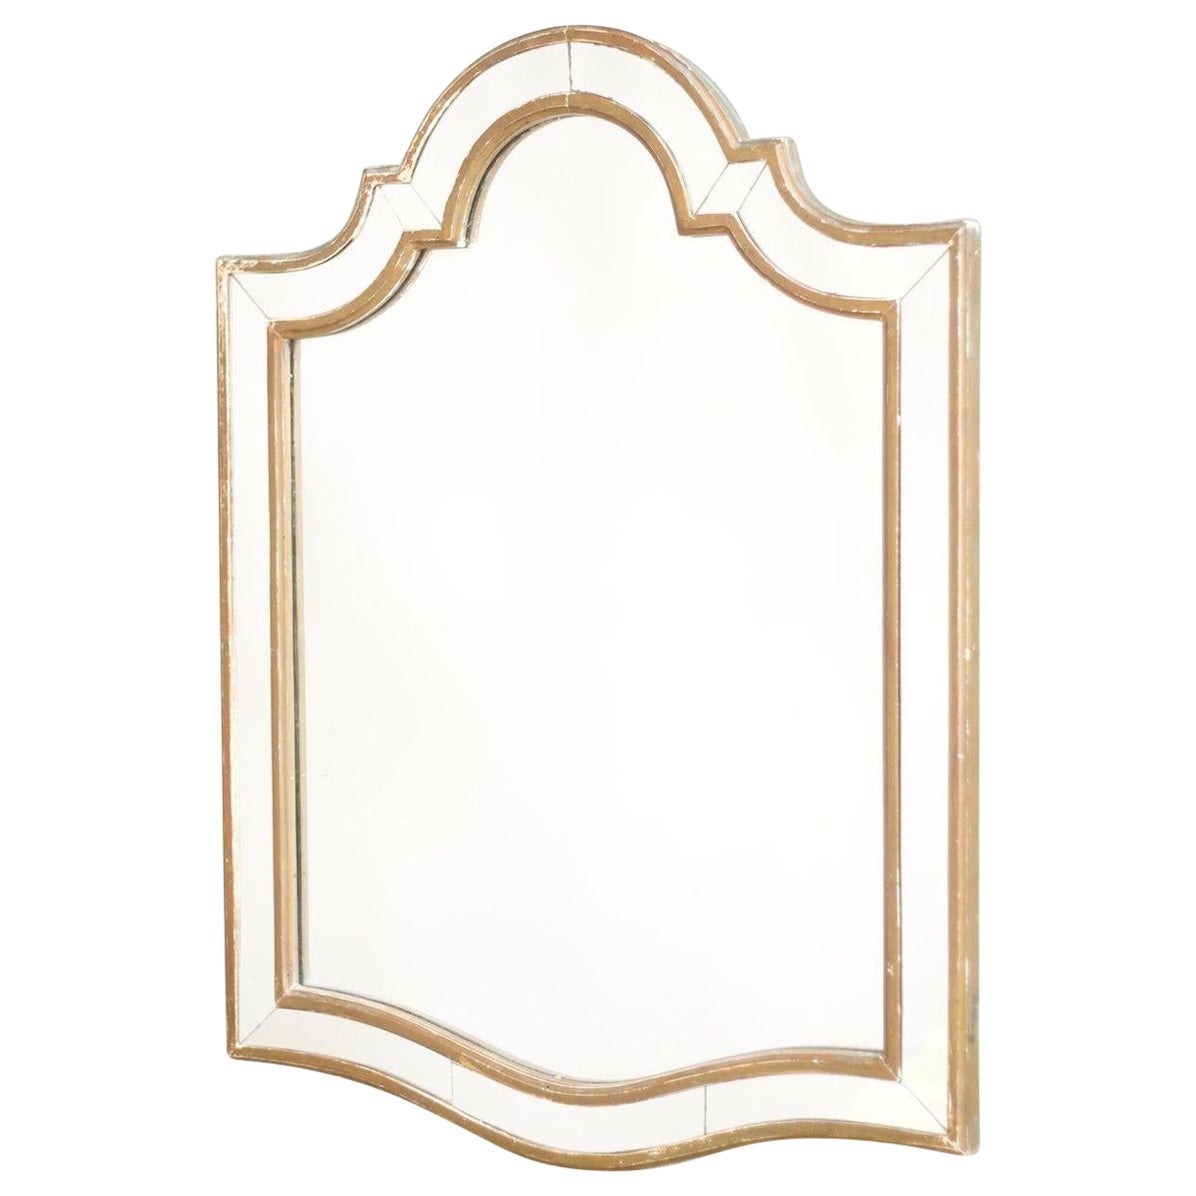 Unusual Shaped Early 20th Century Gilt Mirror